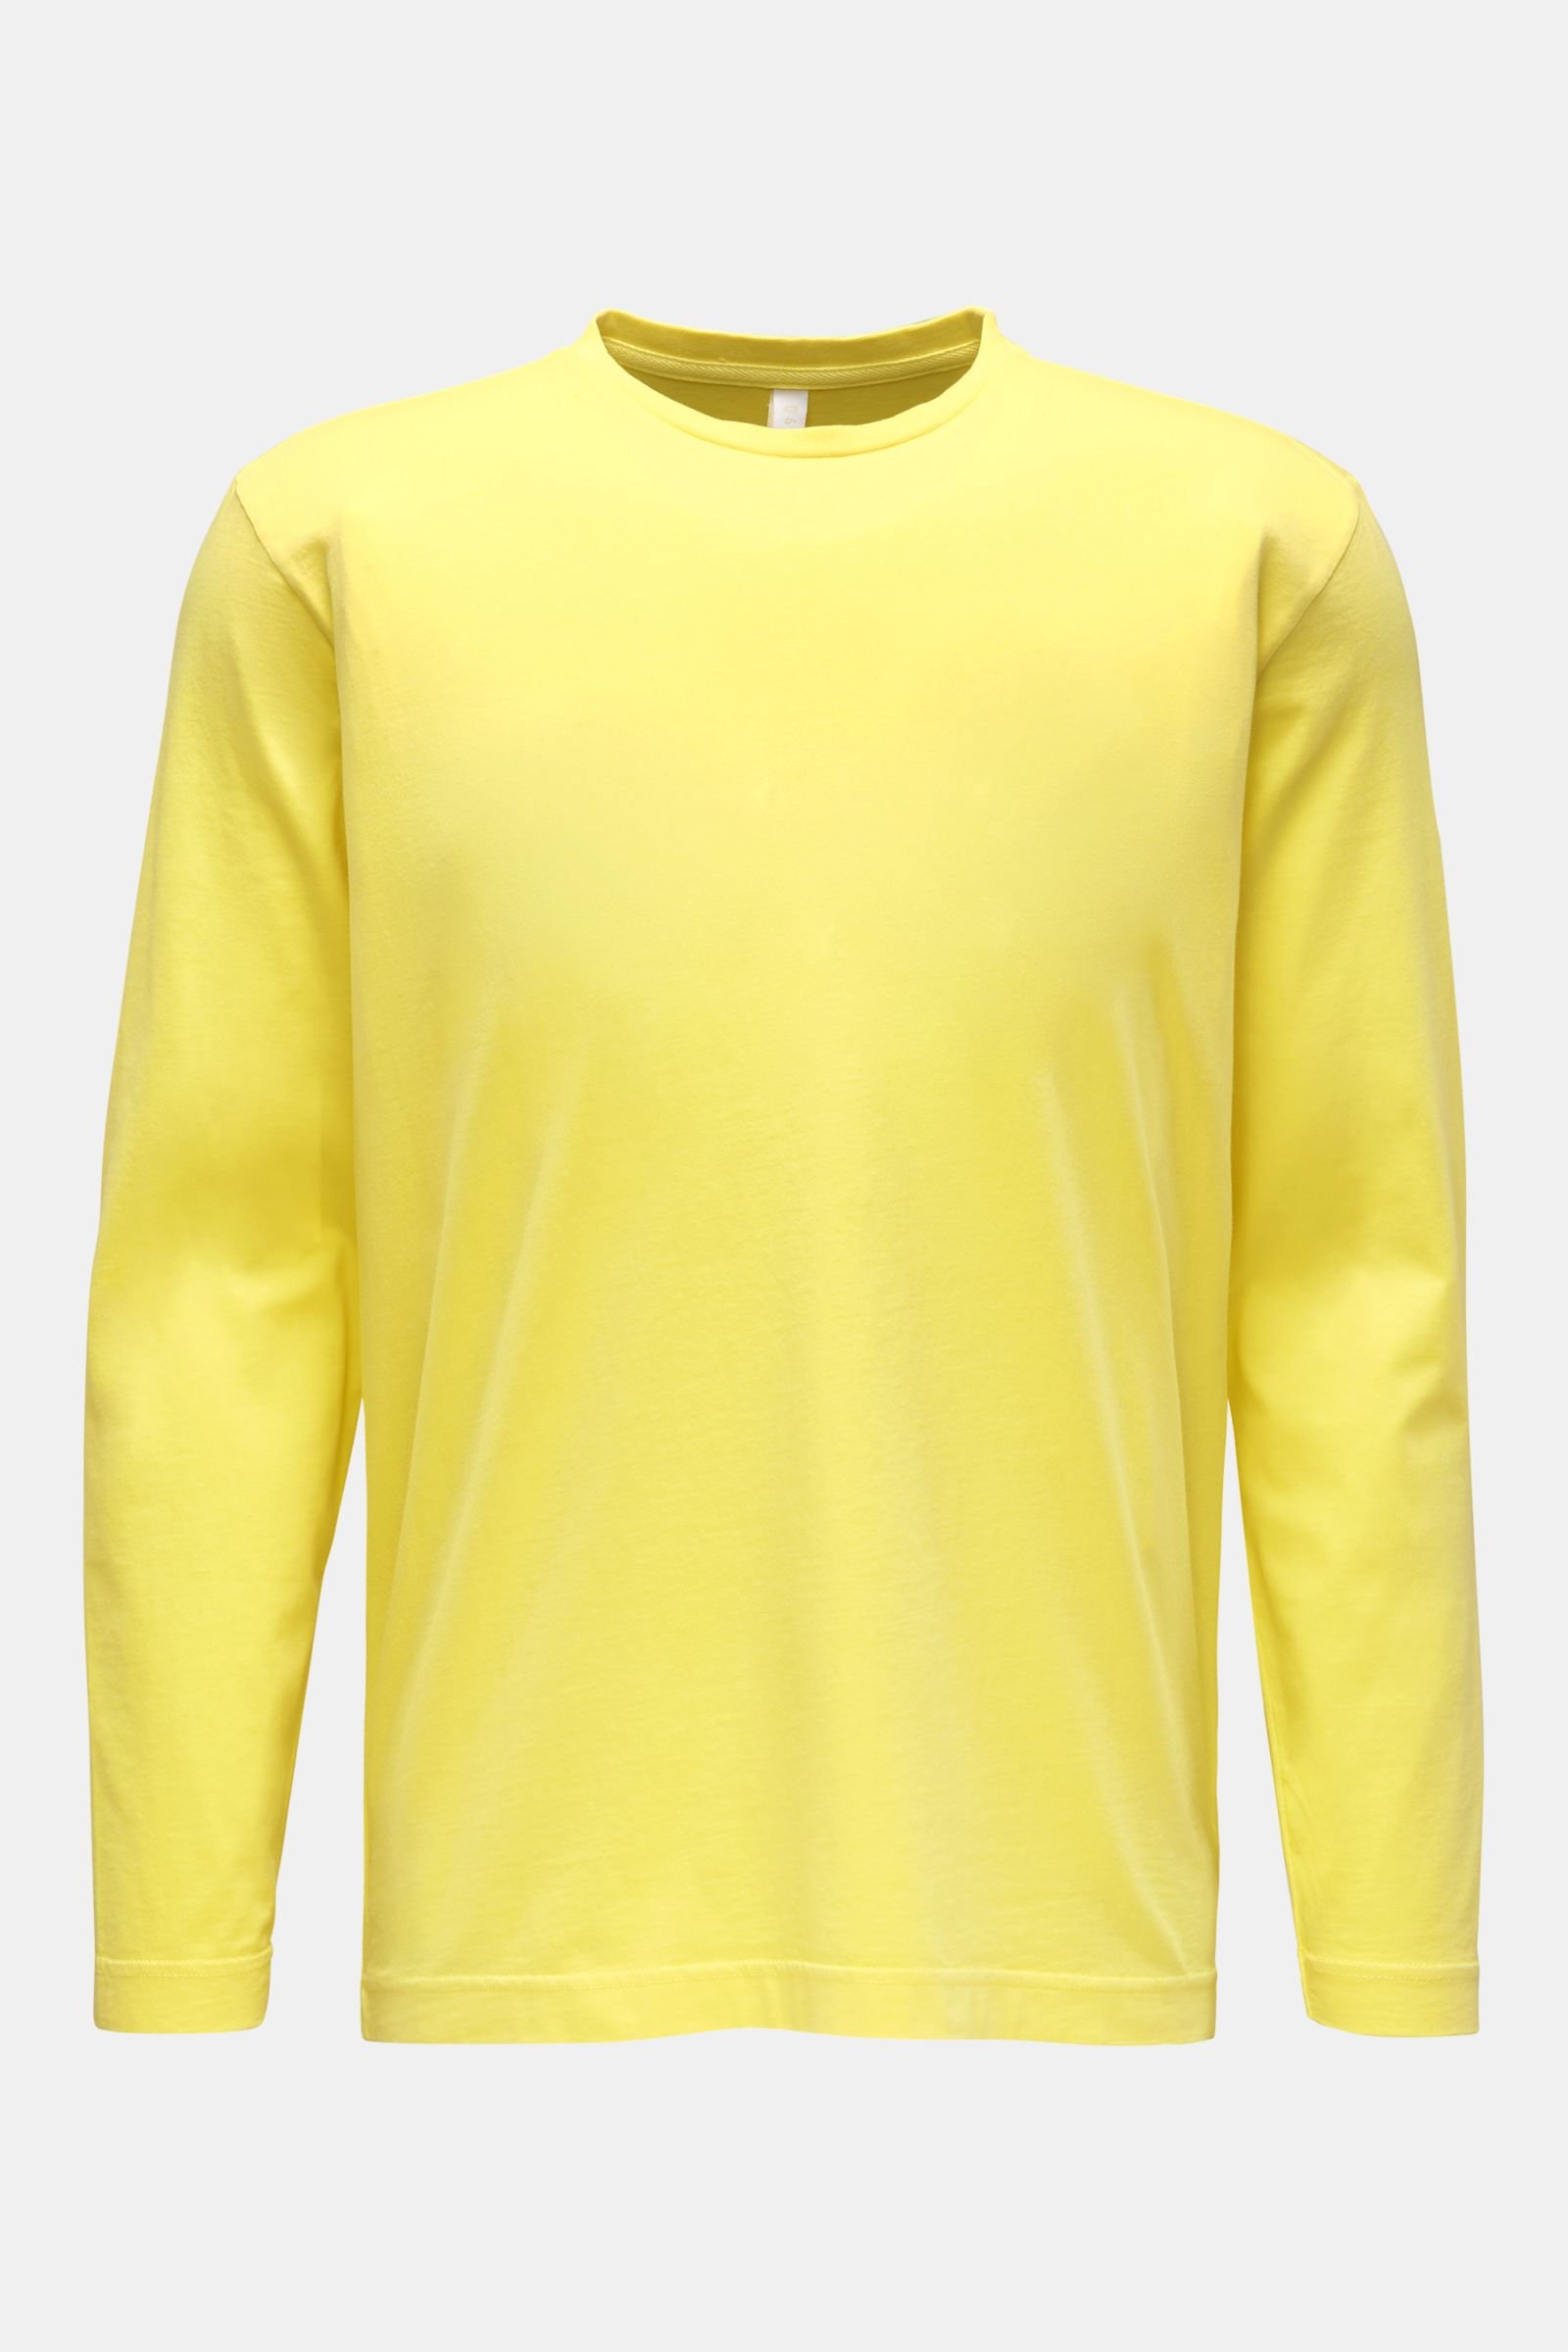 Crew neck long sleeve 'Jersey Tee' yellow